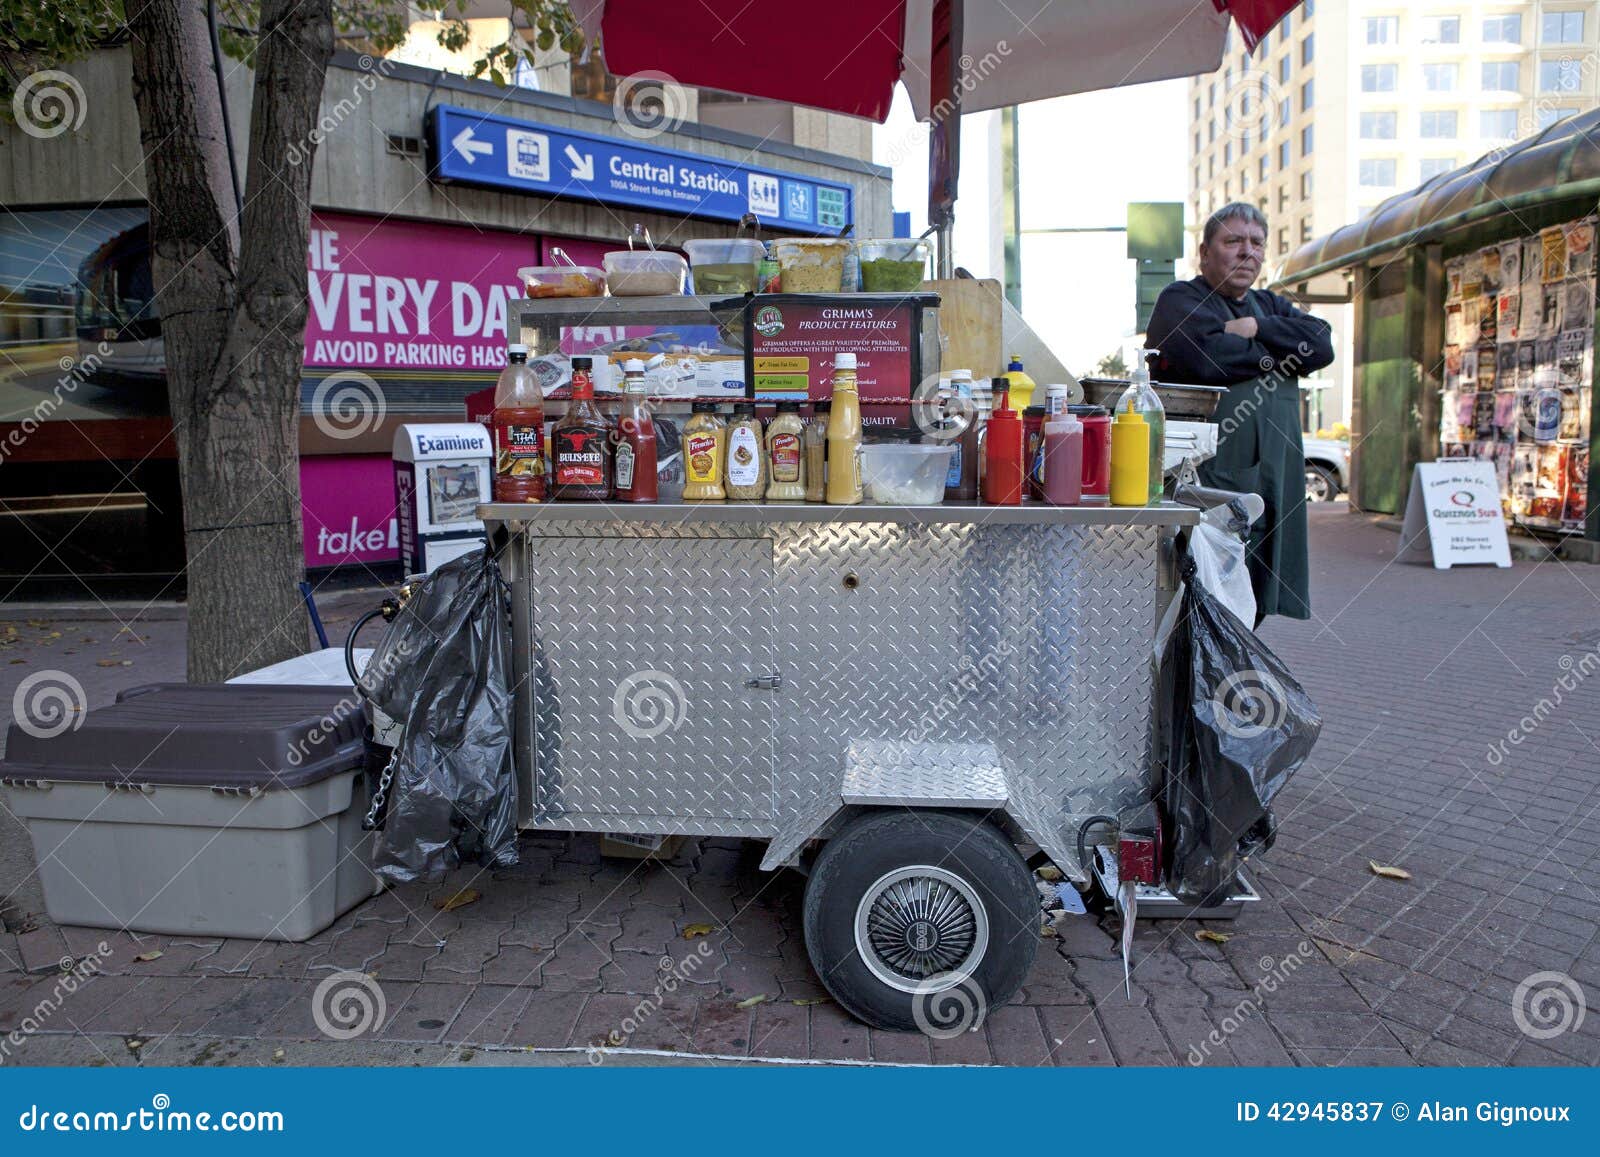 hot-dog-seller-edmonton-canada-his-stand-city-42945837.jpg